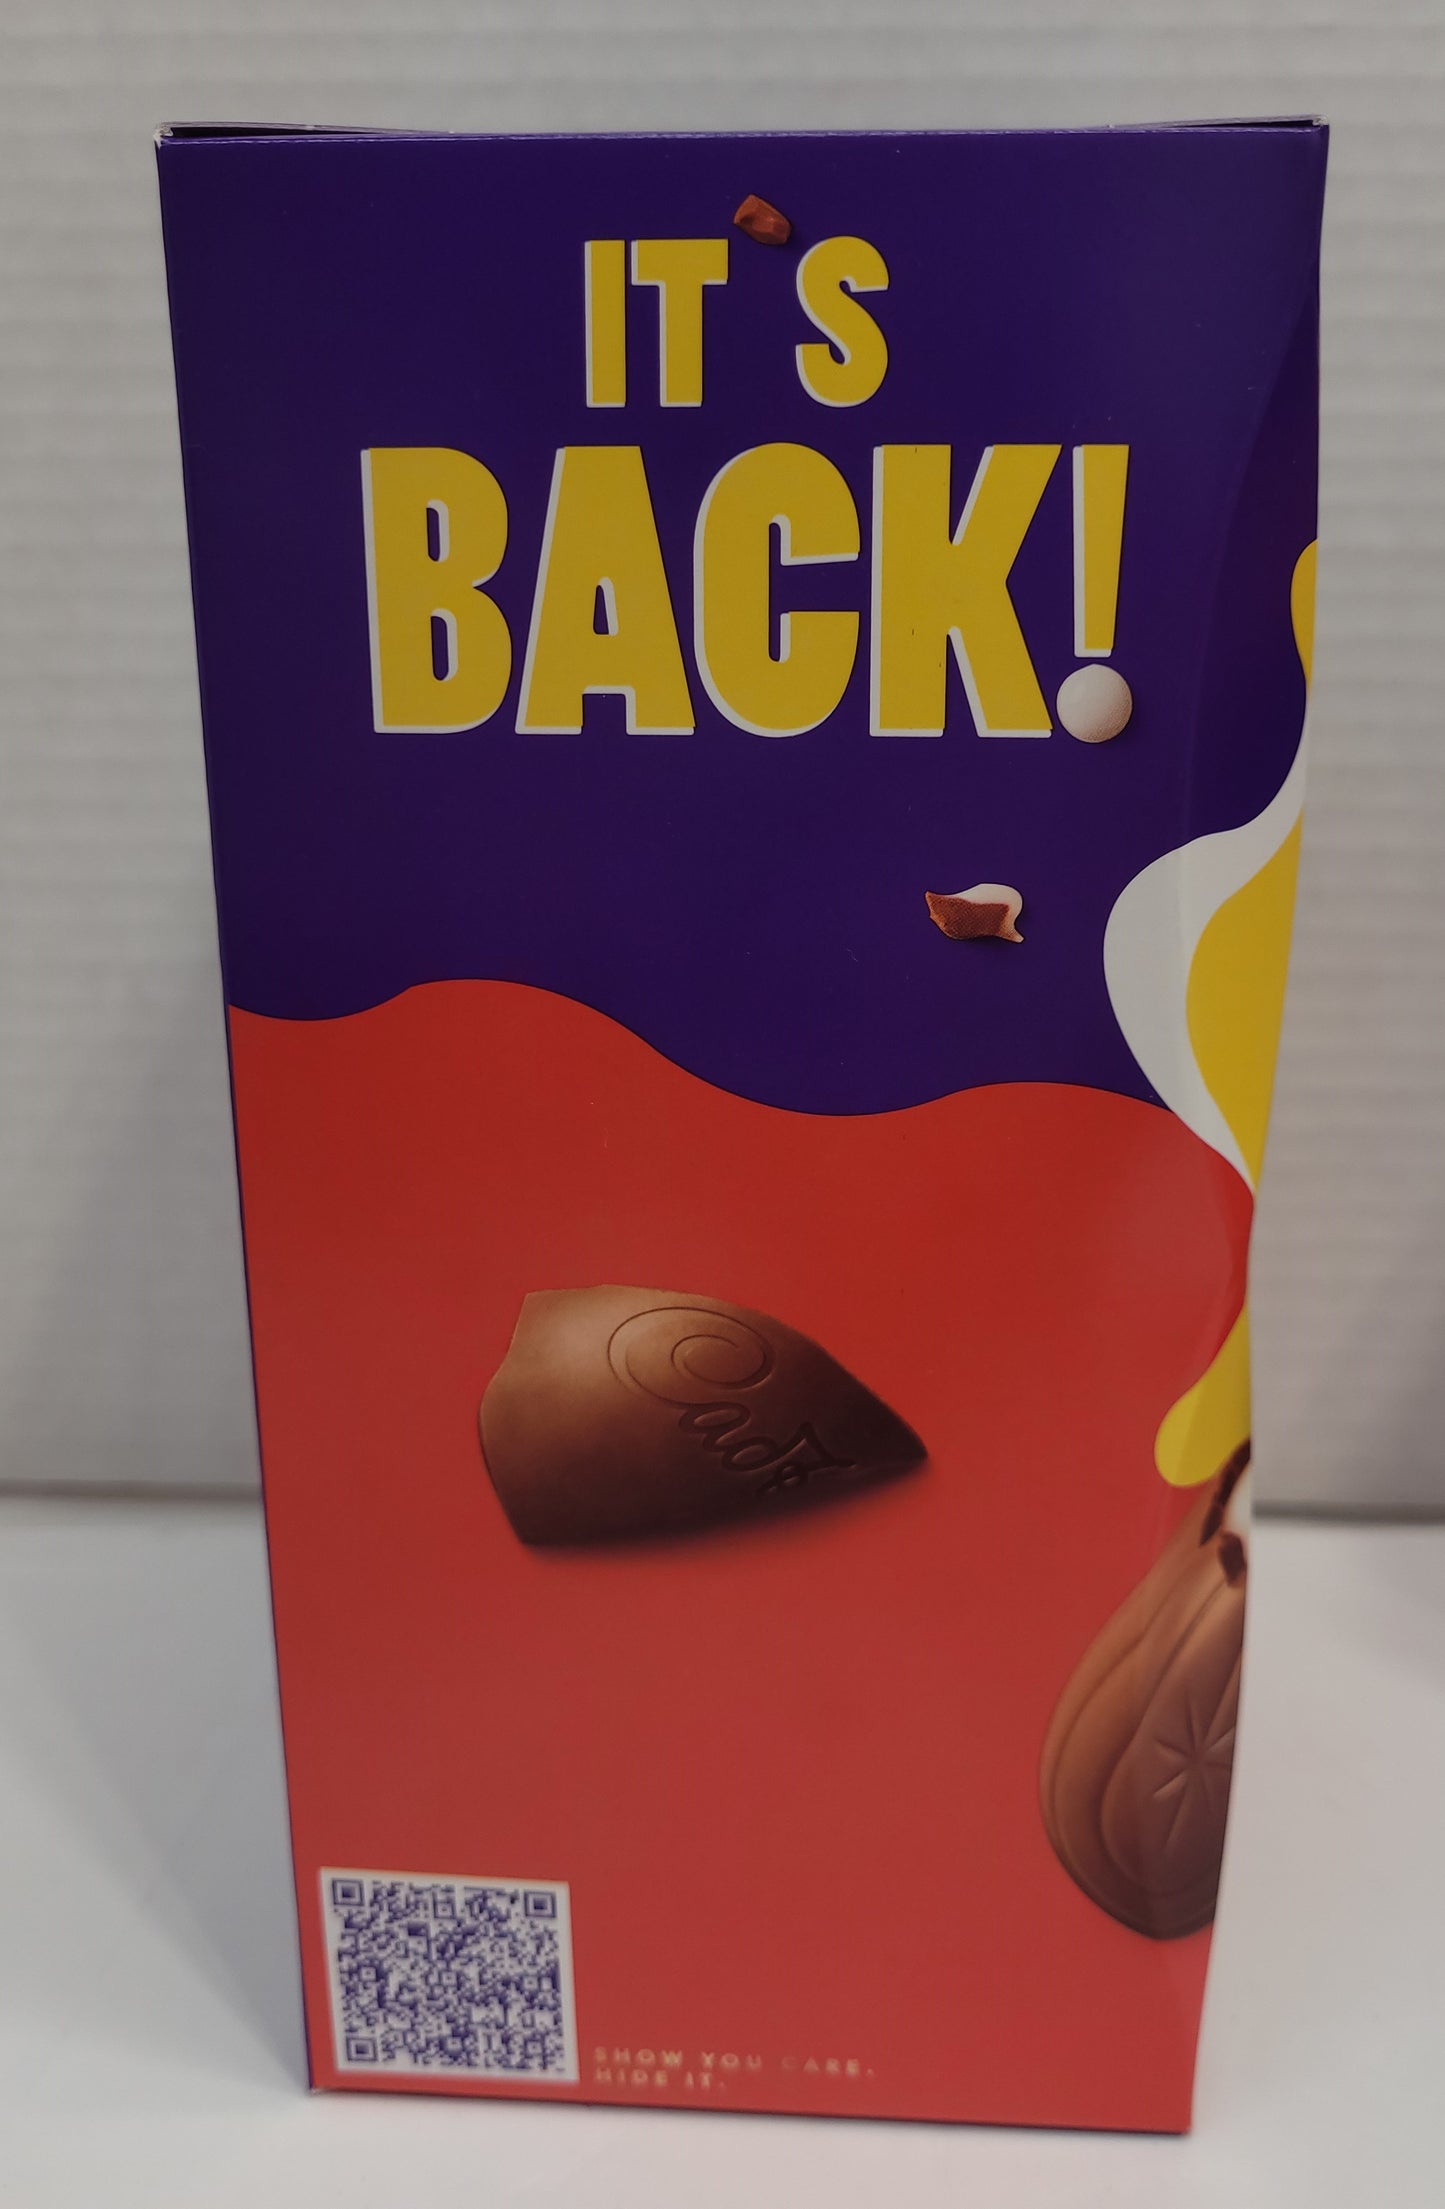 Cadbury Creme Egg Large Easter Egg